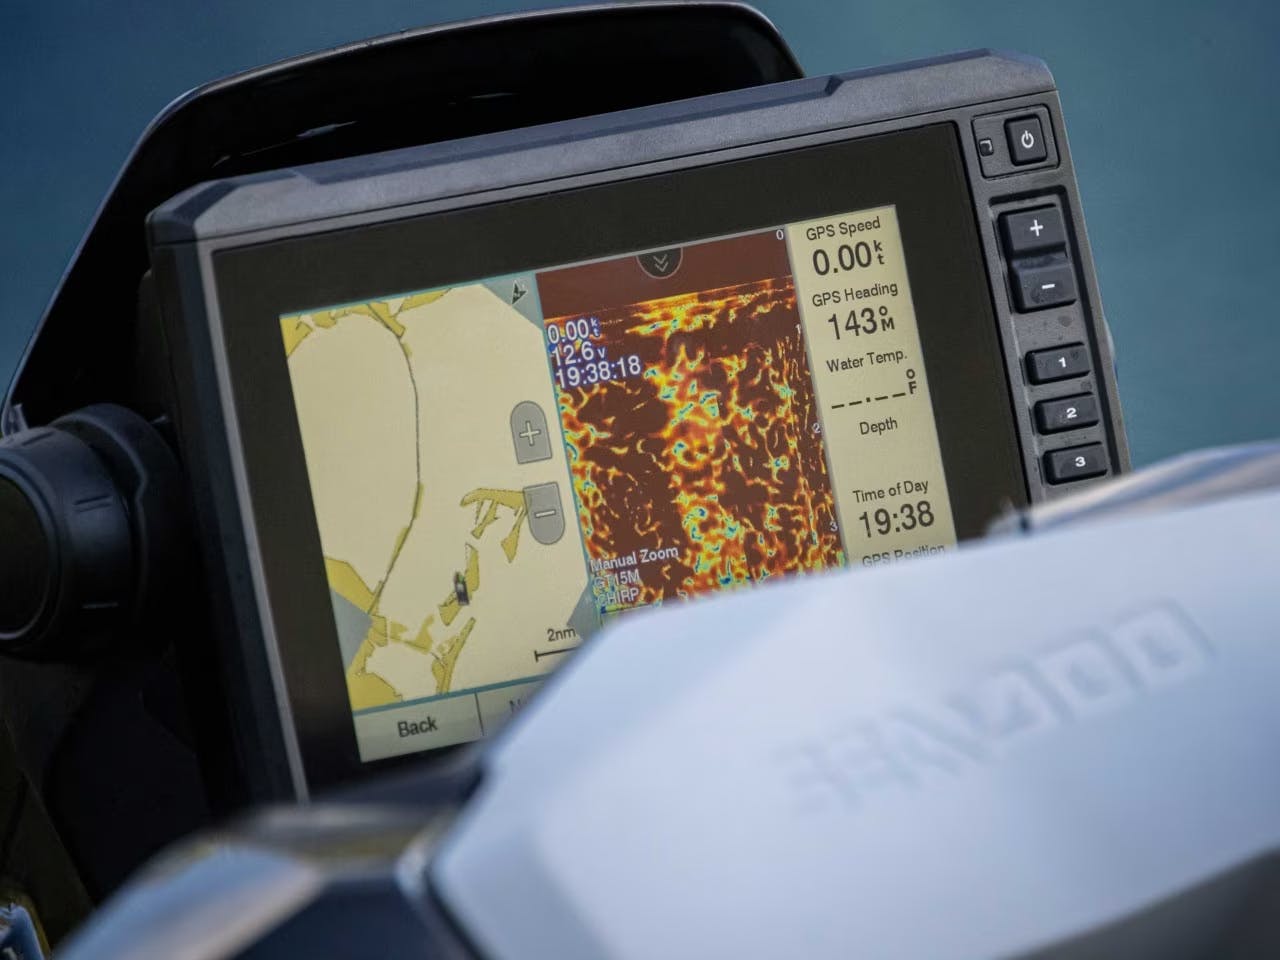 GPS y localizador de pesca Garmin con pantalla táctil de 7 pulgadas (17,8 cm)